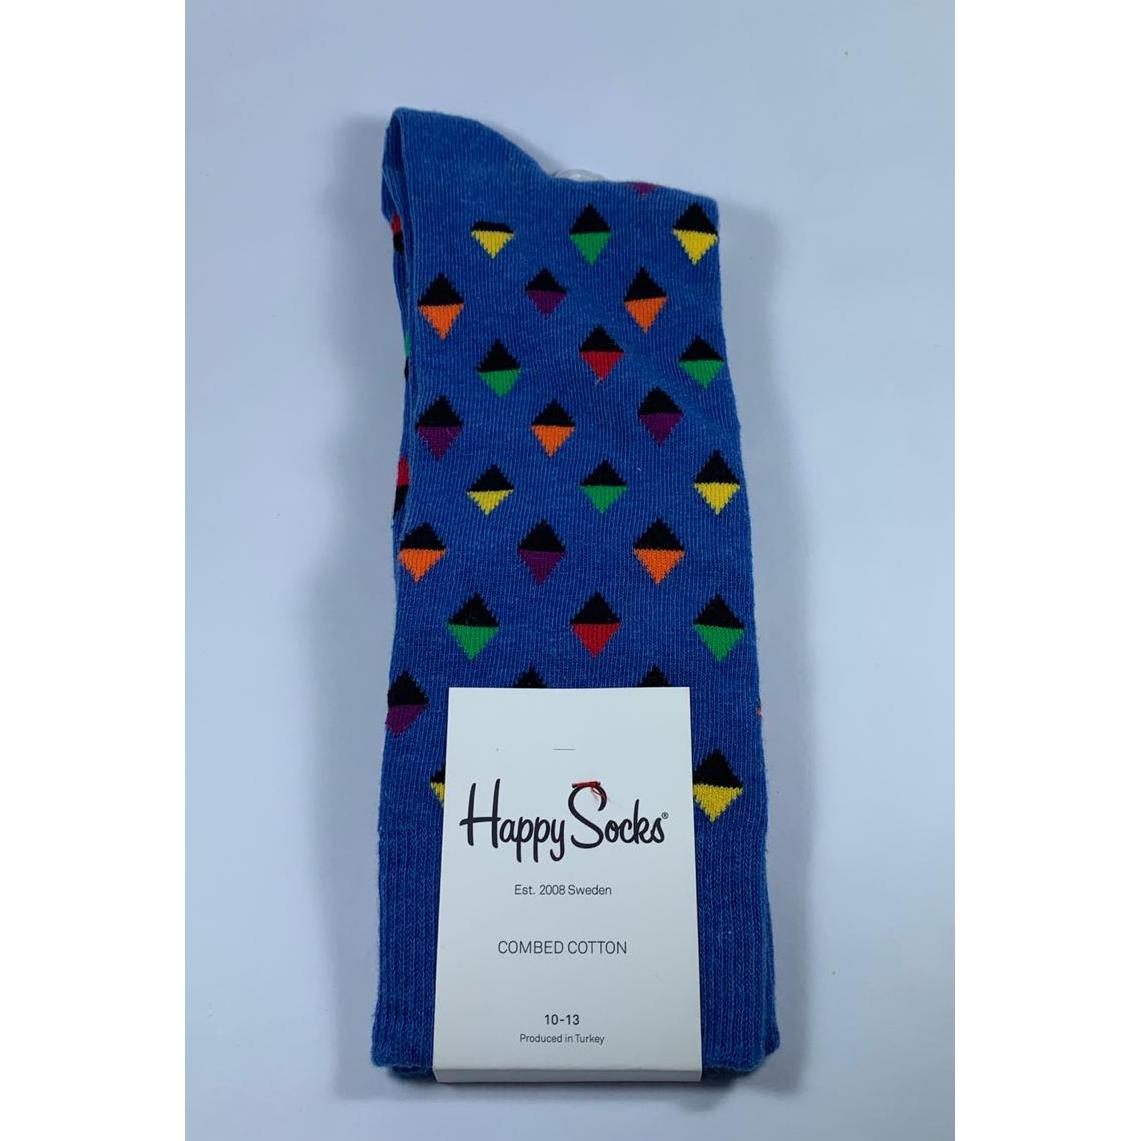 Medias Hombre Happy Socks, azul con rombos de colores. - The Gift Shop Costa Rica